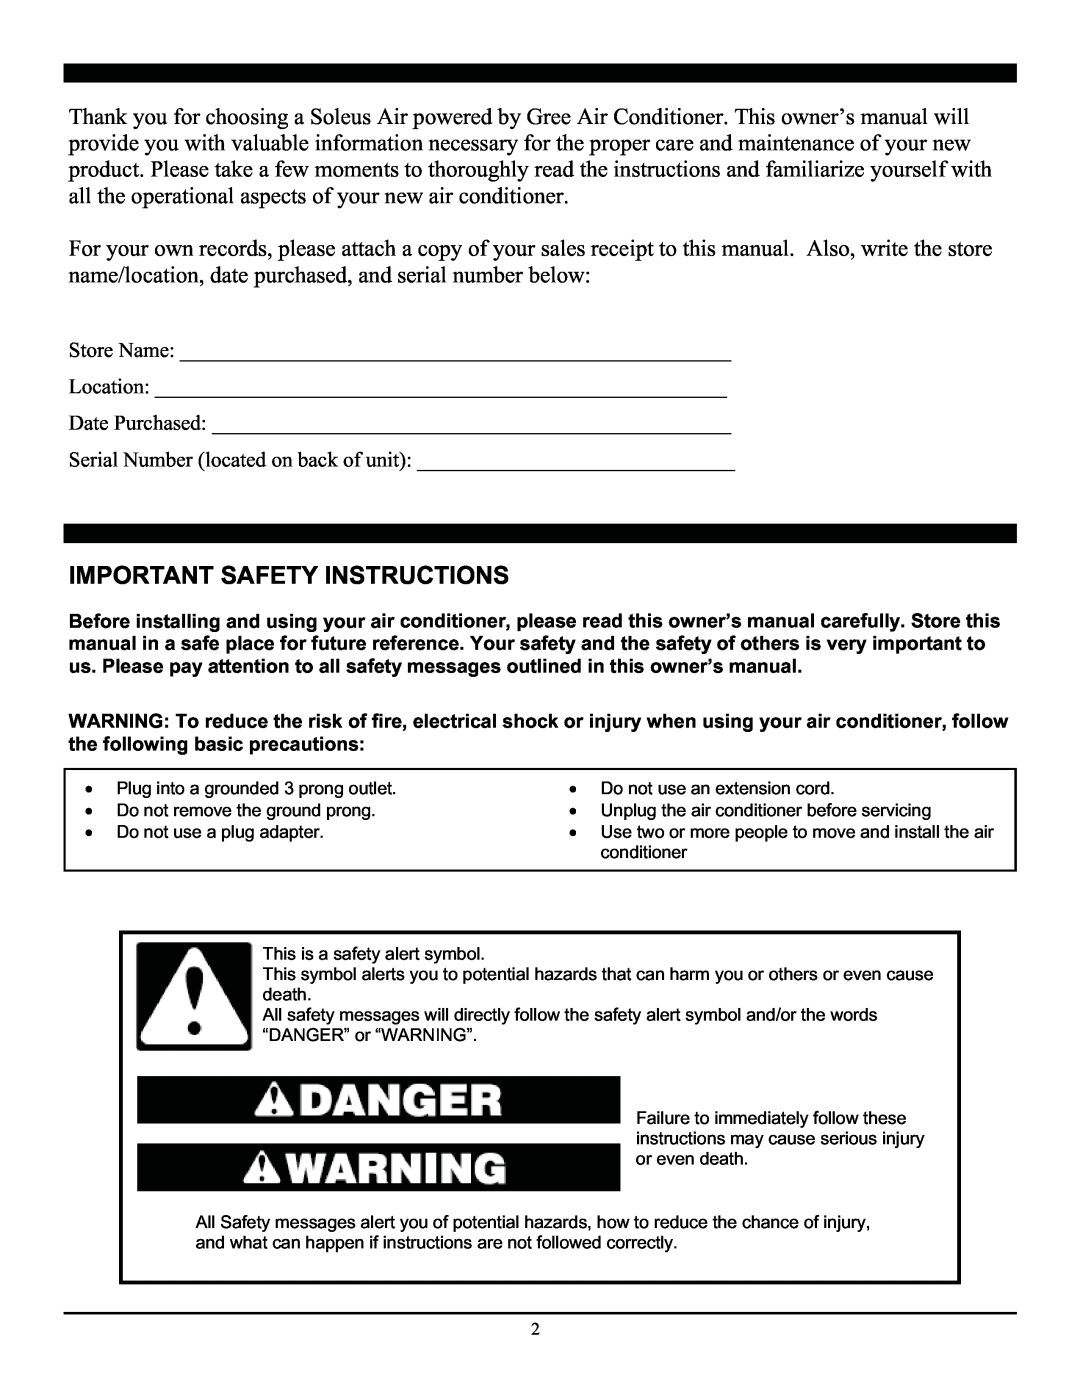 Soleus Air SG-TTW-14HC manual Important Safety Instructions 